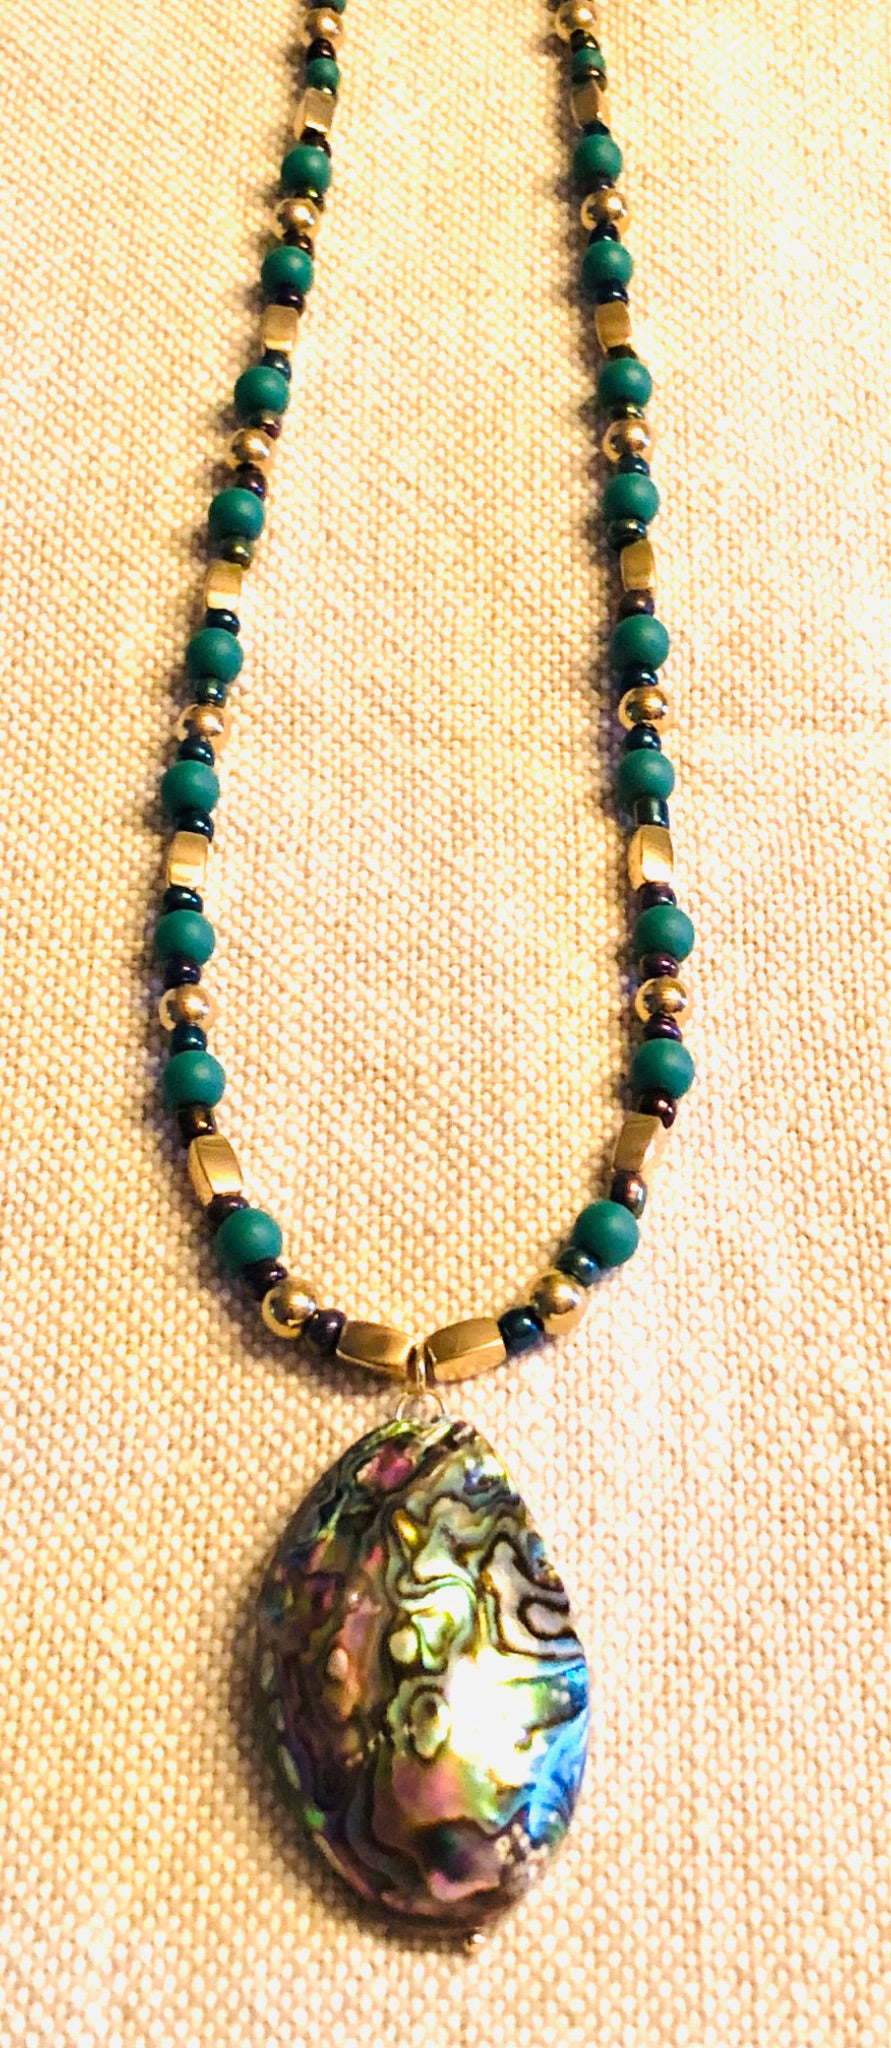 015-144 Abalone Shell w Gold & Green Beads - 1